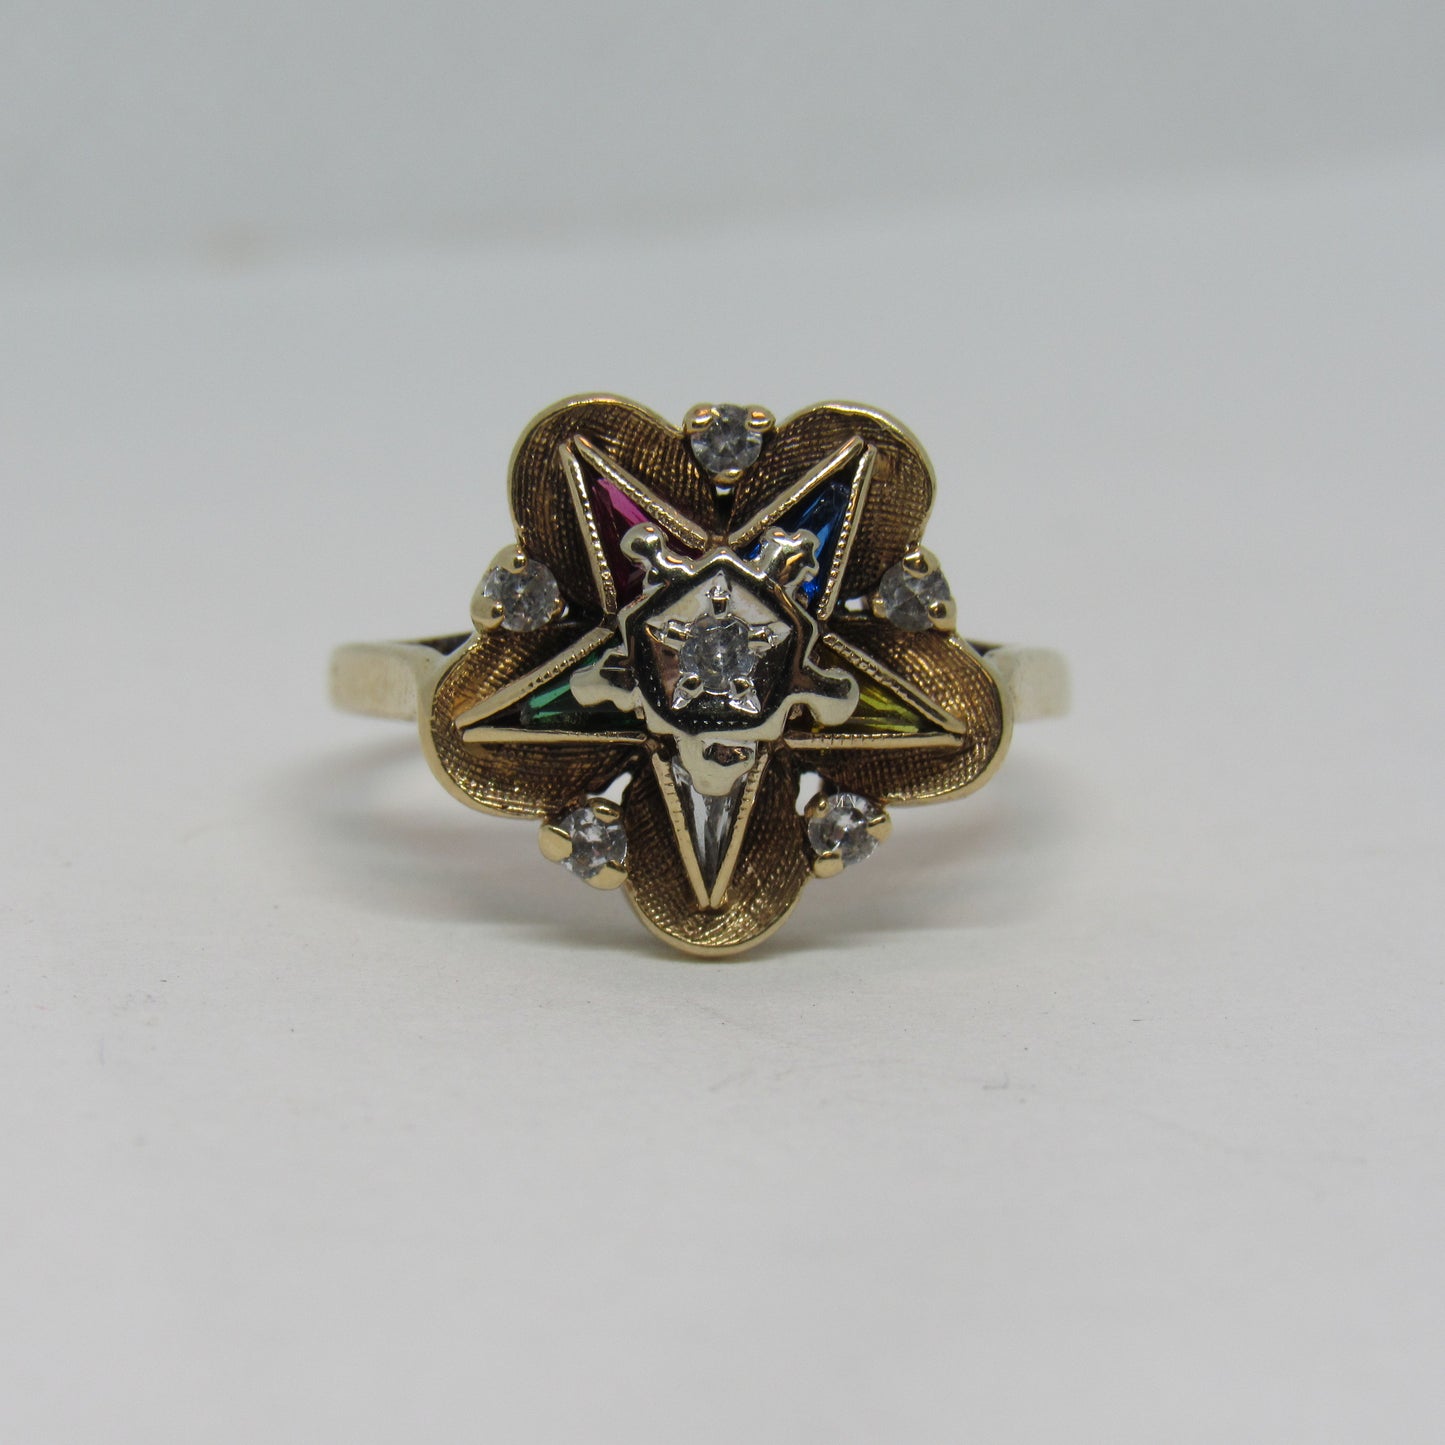 10K Yellow Gold Women's Masonic Ring Order of the Eastern Star  - Sz 7.25